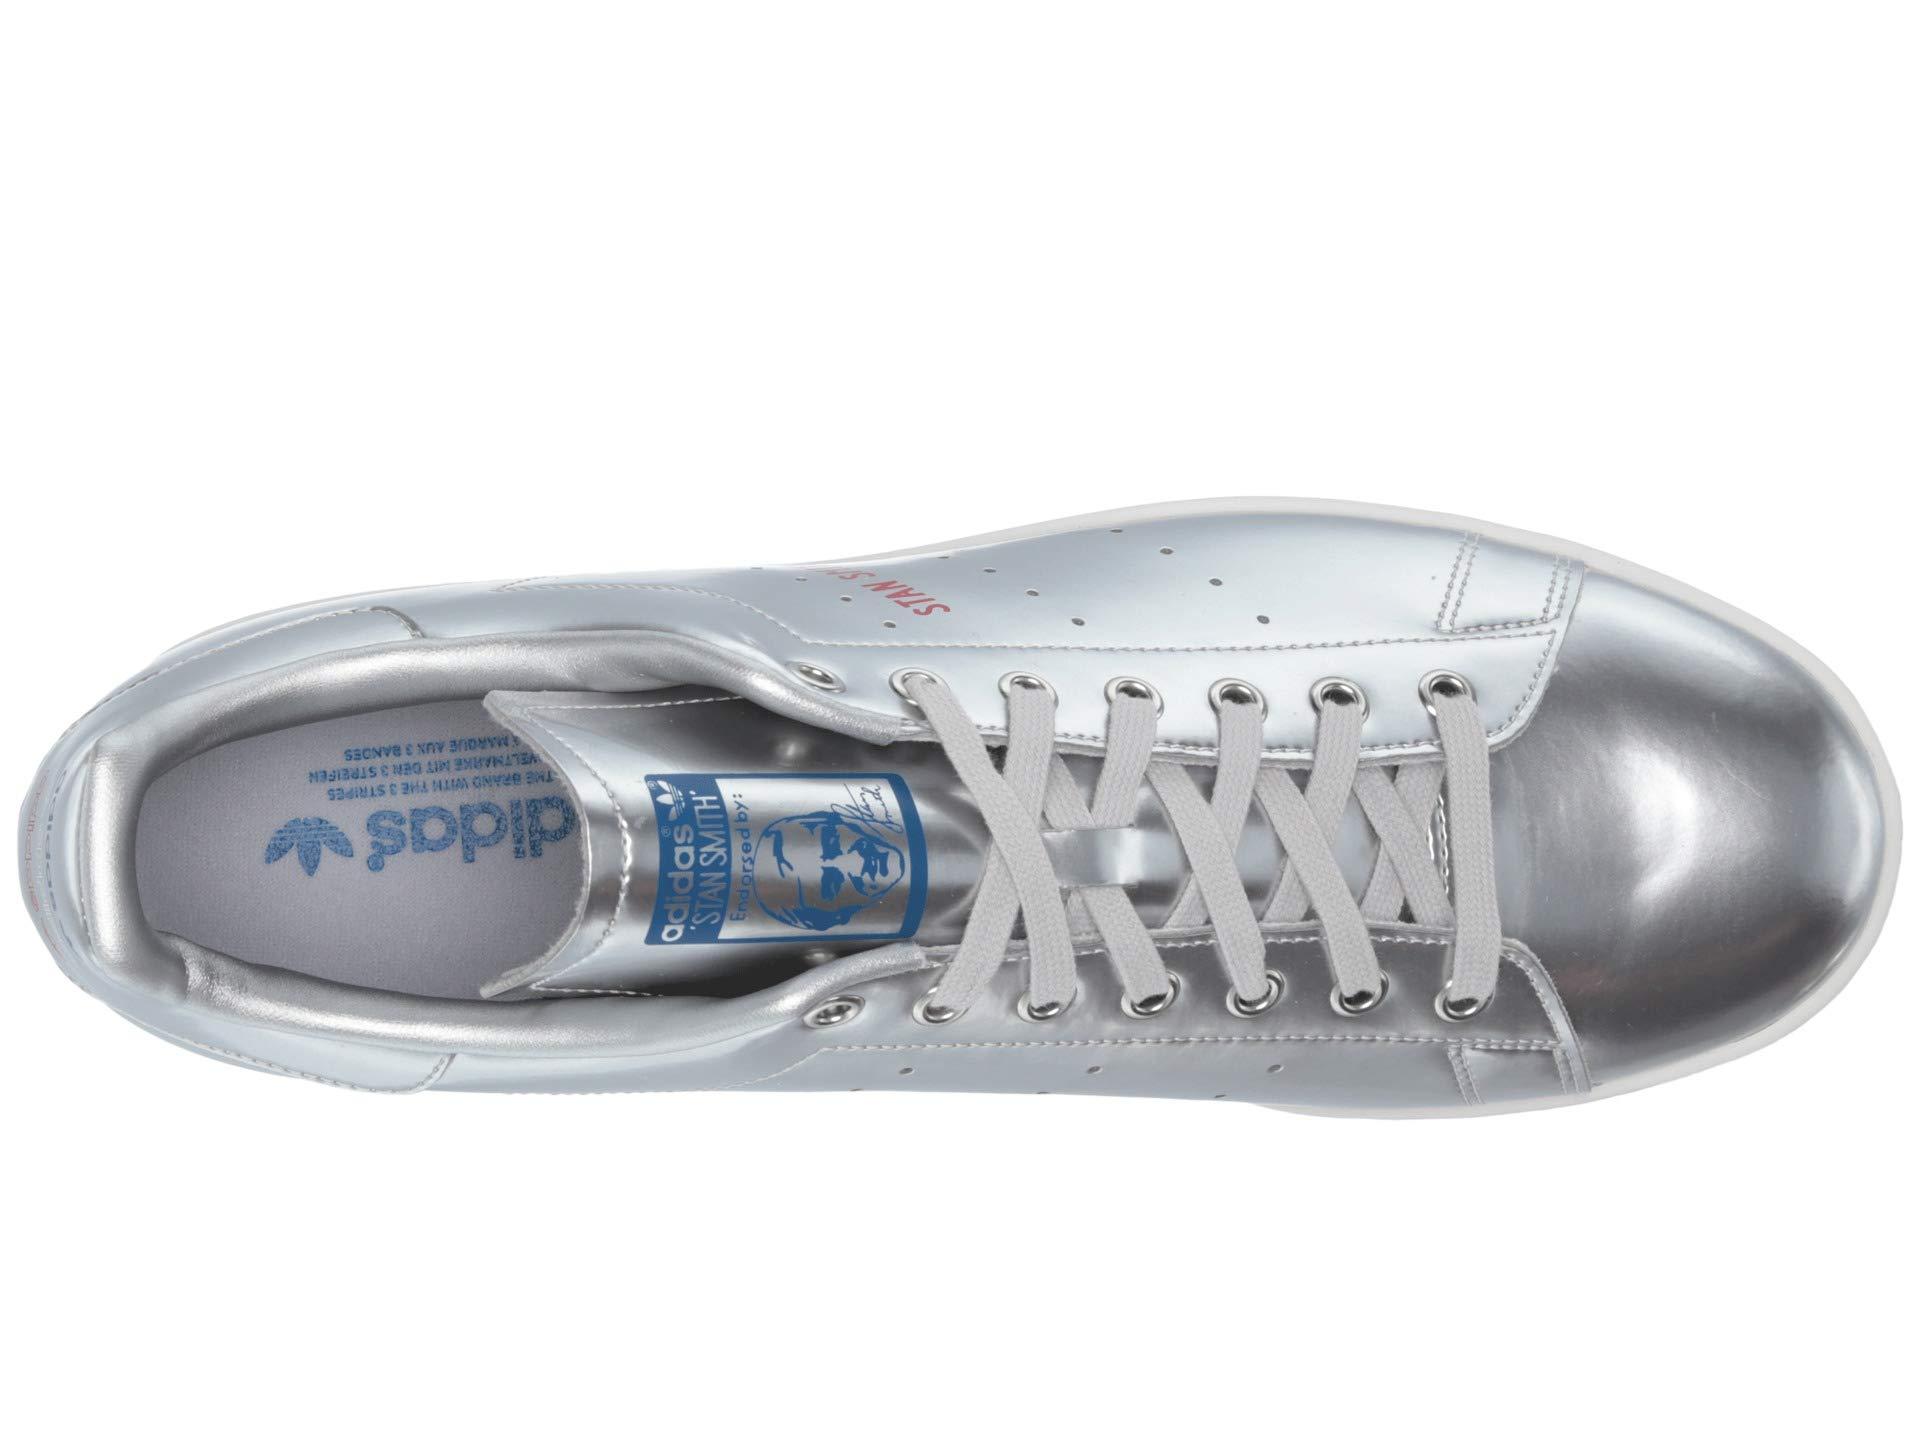 adidas Originals S Stan Smith Sneaker in Silver Metallic/Silver Metallic/  (Metallic) for Men - Save 44% | Lyst